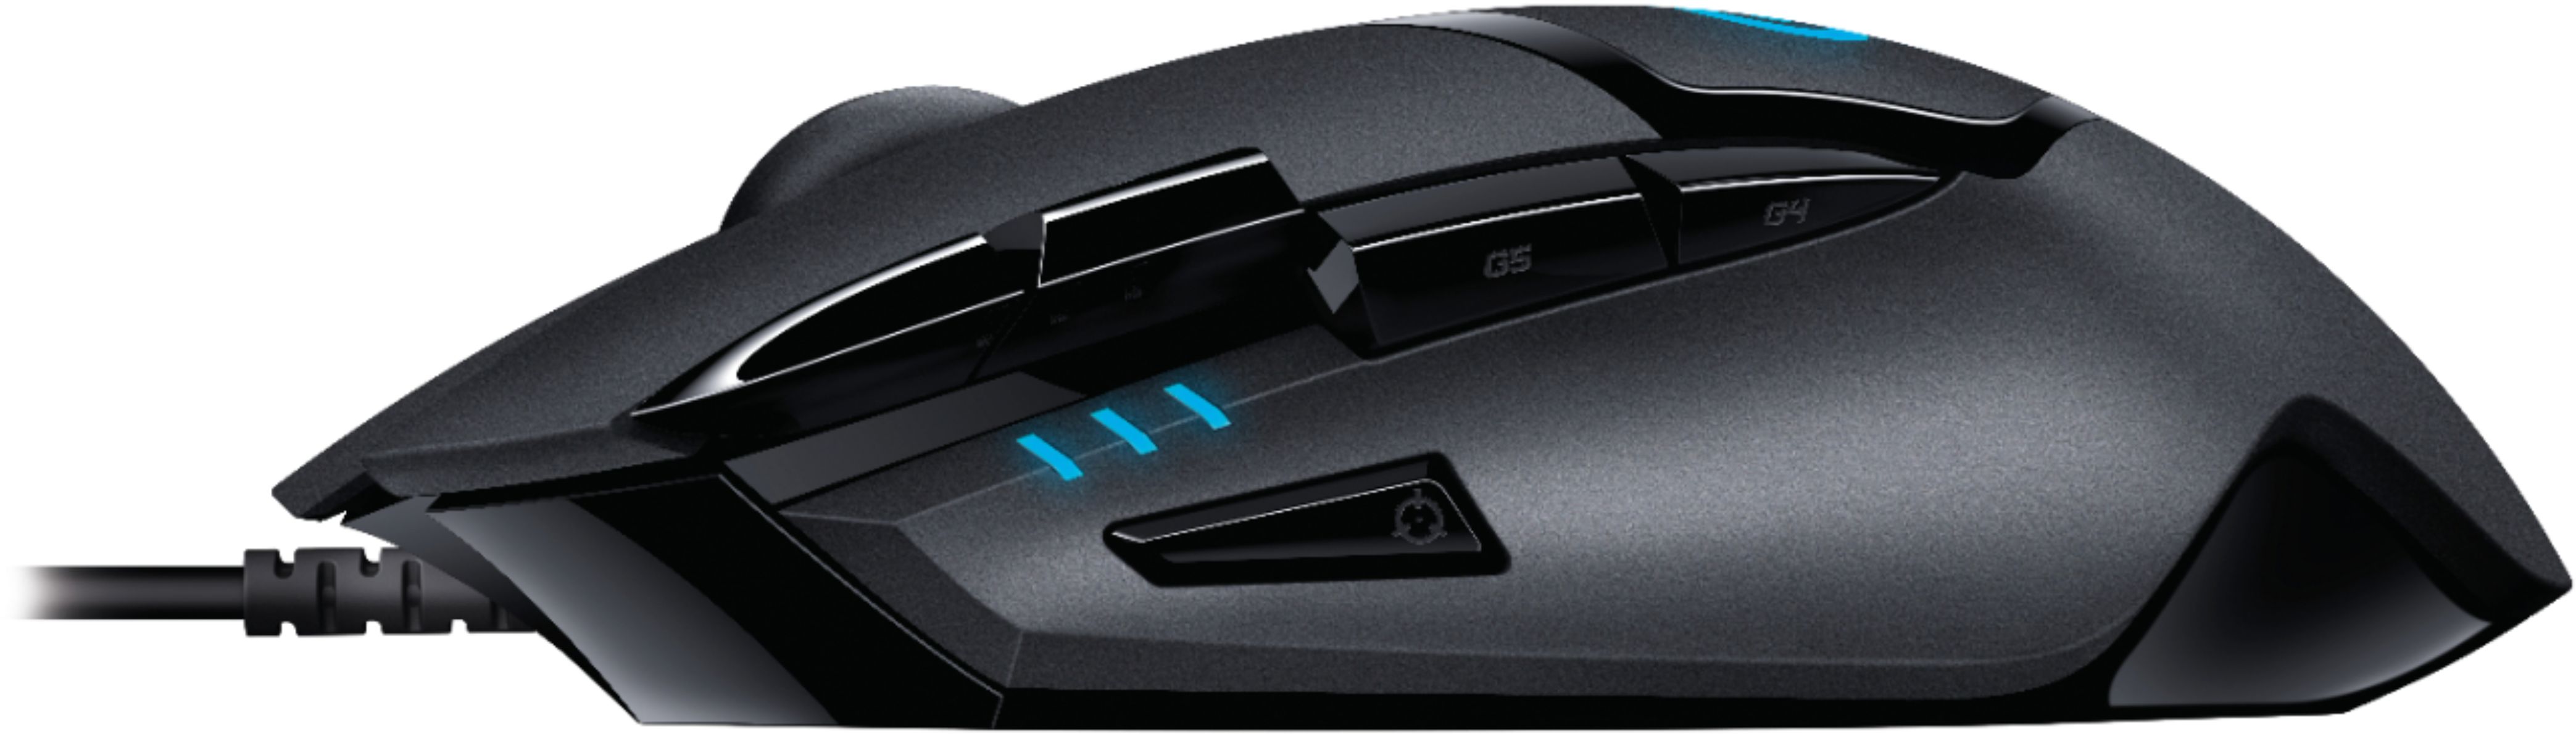 Logitech G402 Hyperion Fury Wired Gaming Mouse, 4,000 DPI - Black & 213  Prodigy Gaming Keyboard, LIGHTSYNC RGB Backlit Keys, Spill-Resistant,  Customizable Keys, Dedicated Multi-Media Keys- Black : : PC &  Video